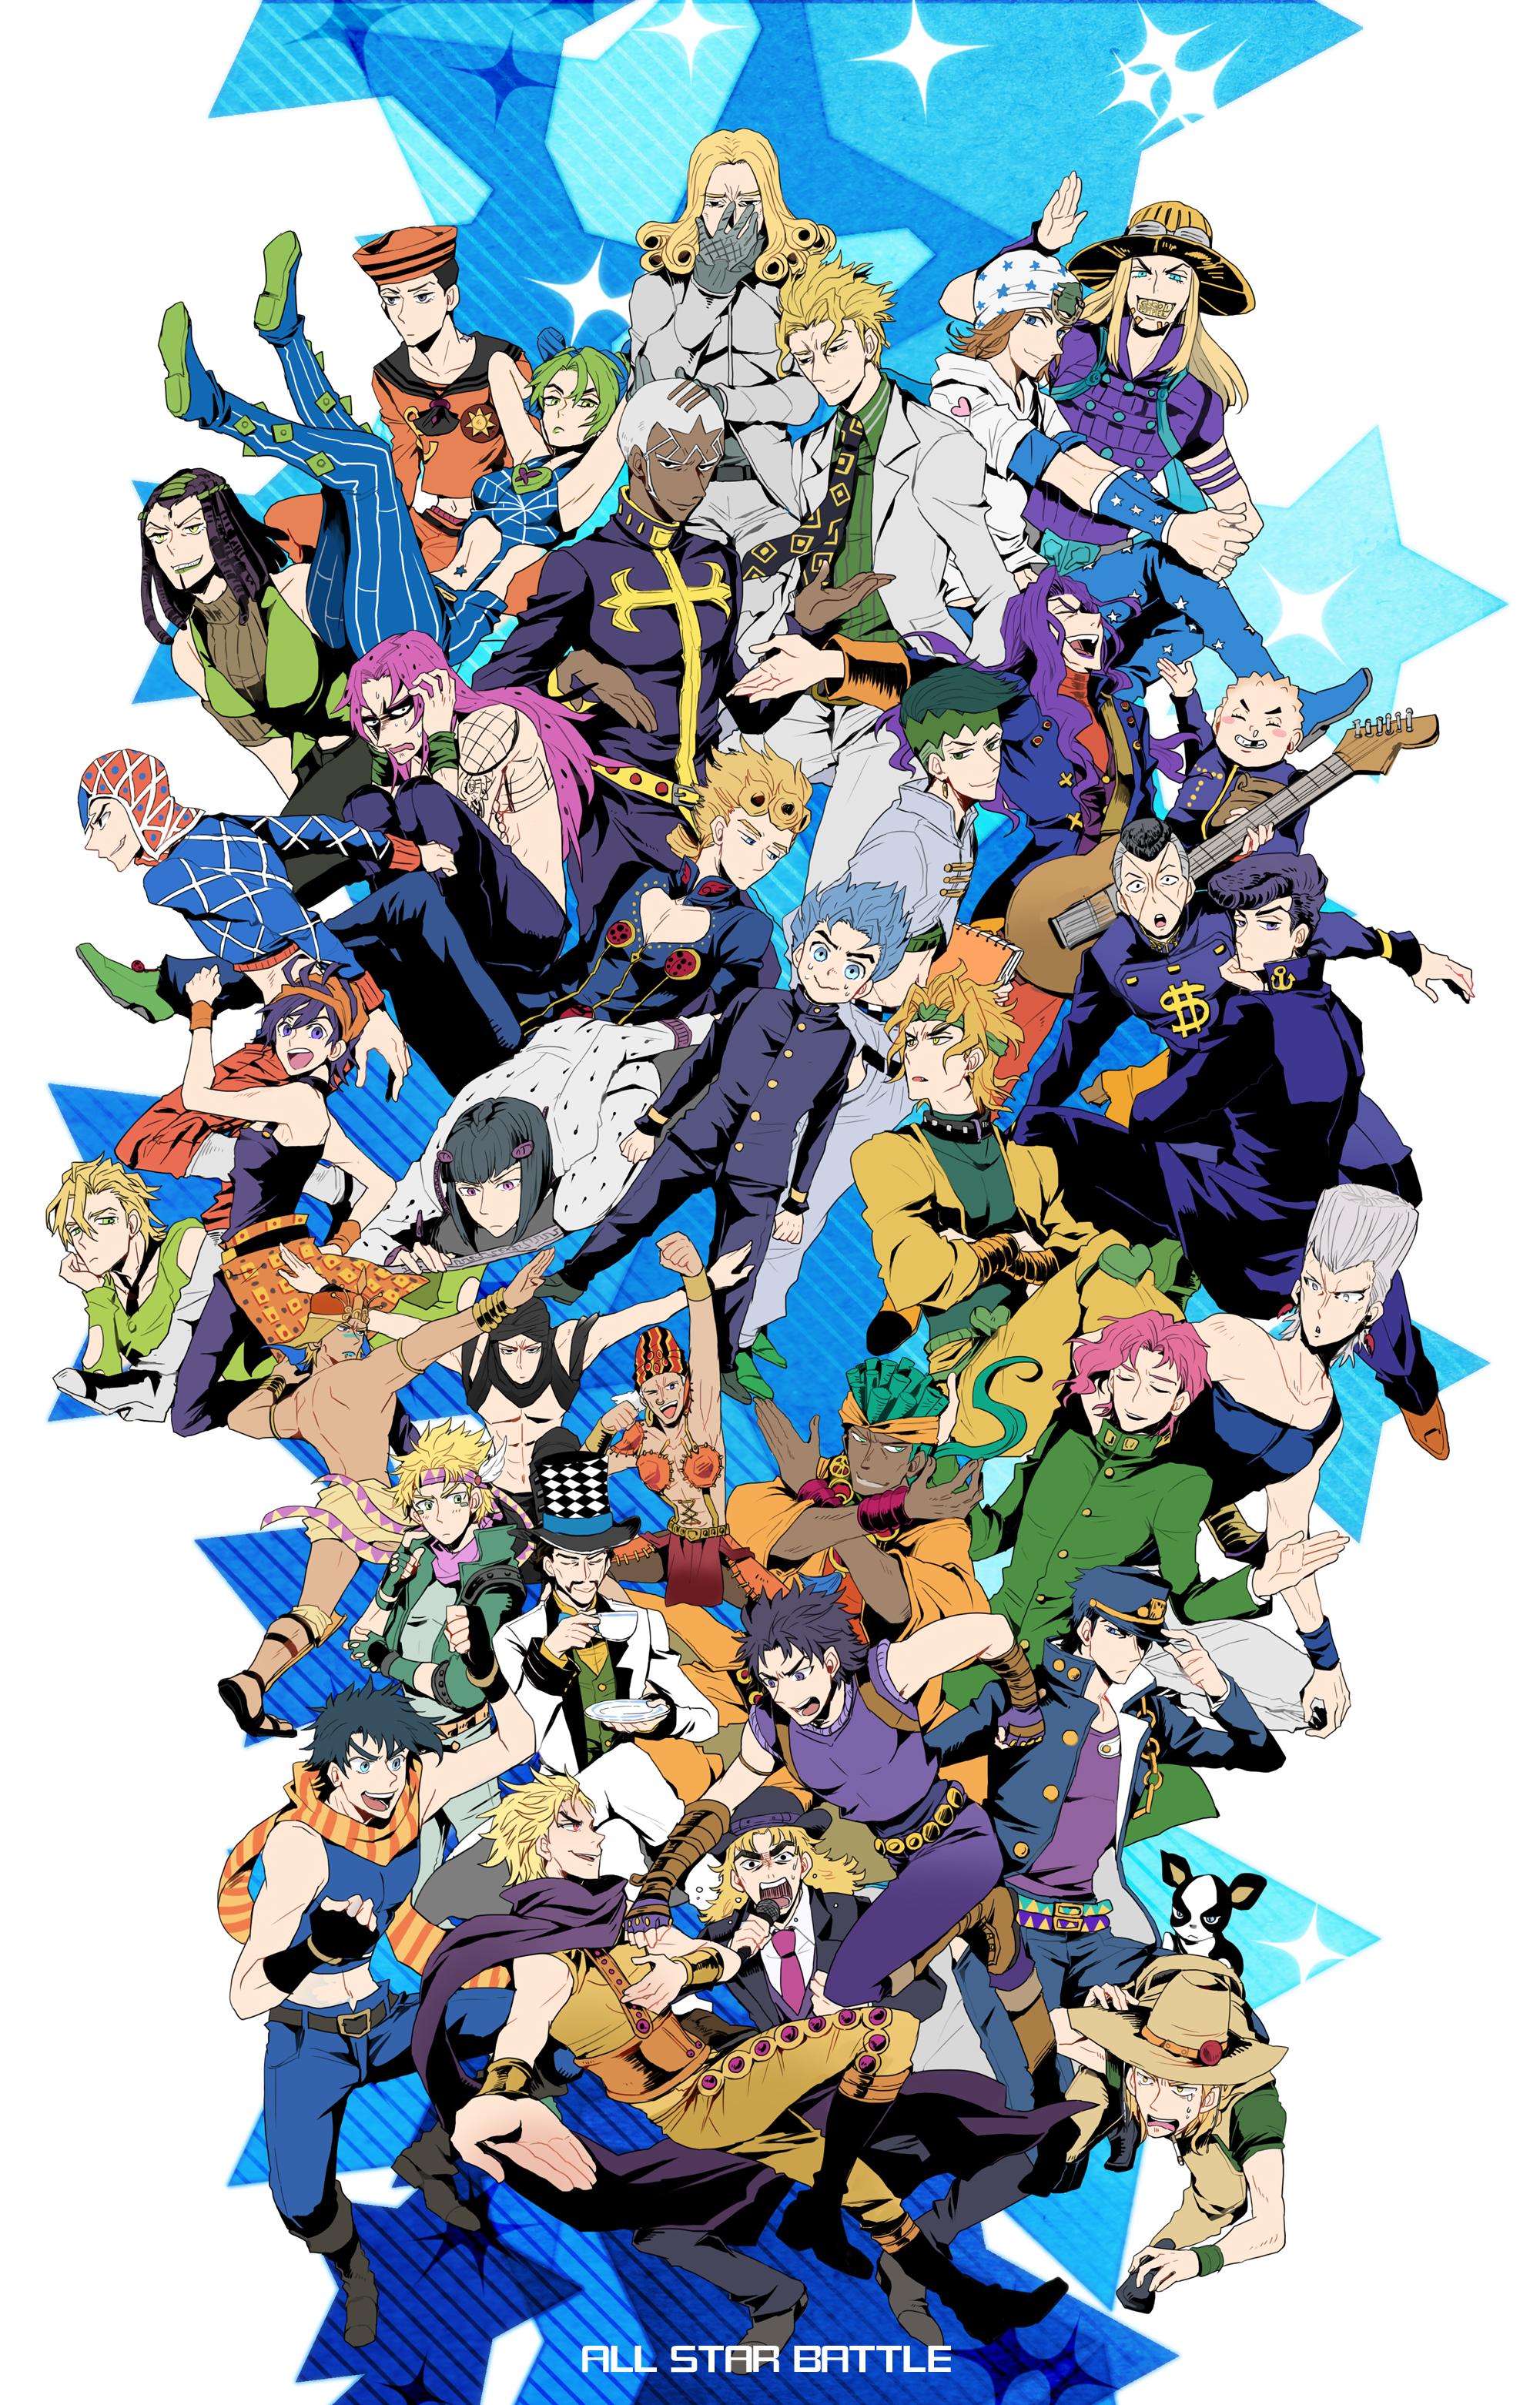 JoJo no Kimyou na Bouken (Jojo's Bizarre Adventure) Hirohiko Wallpaper Anime Image Board